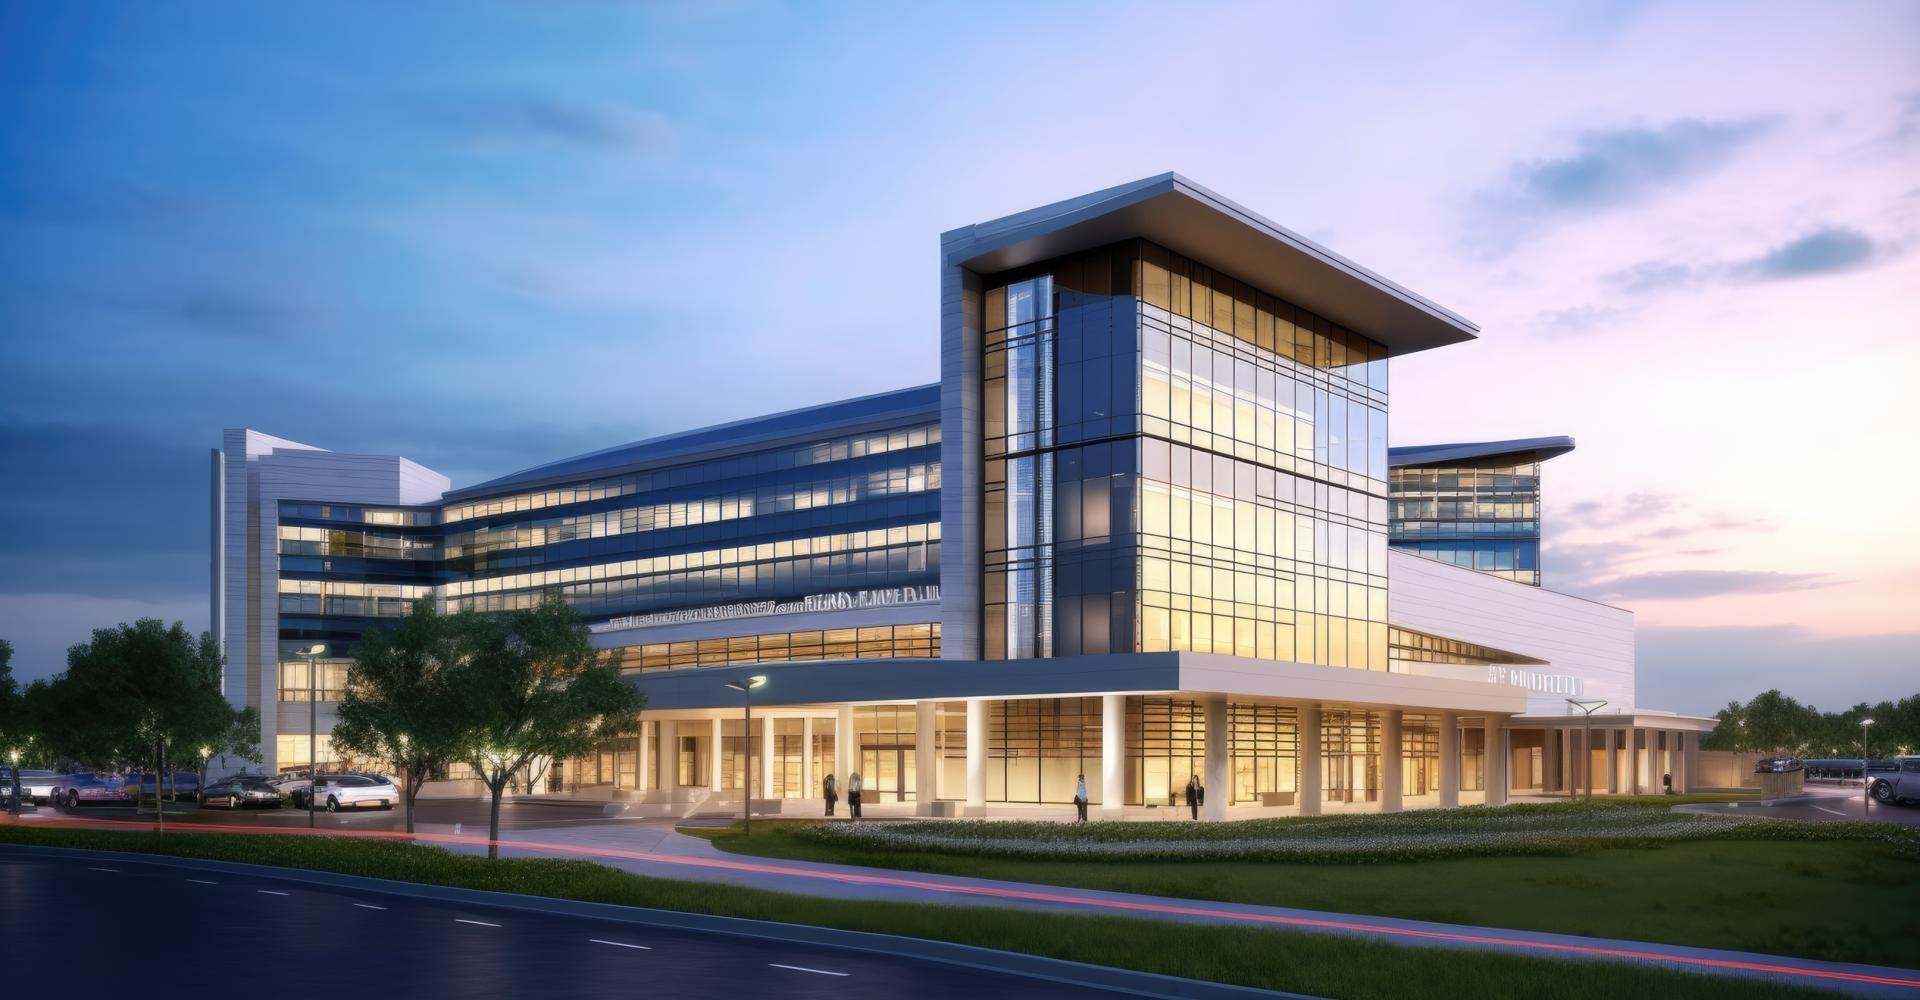 A high tech hospital with glass windows